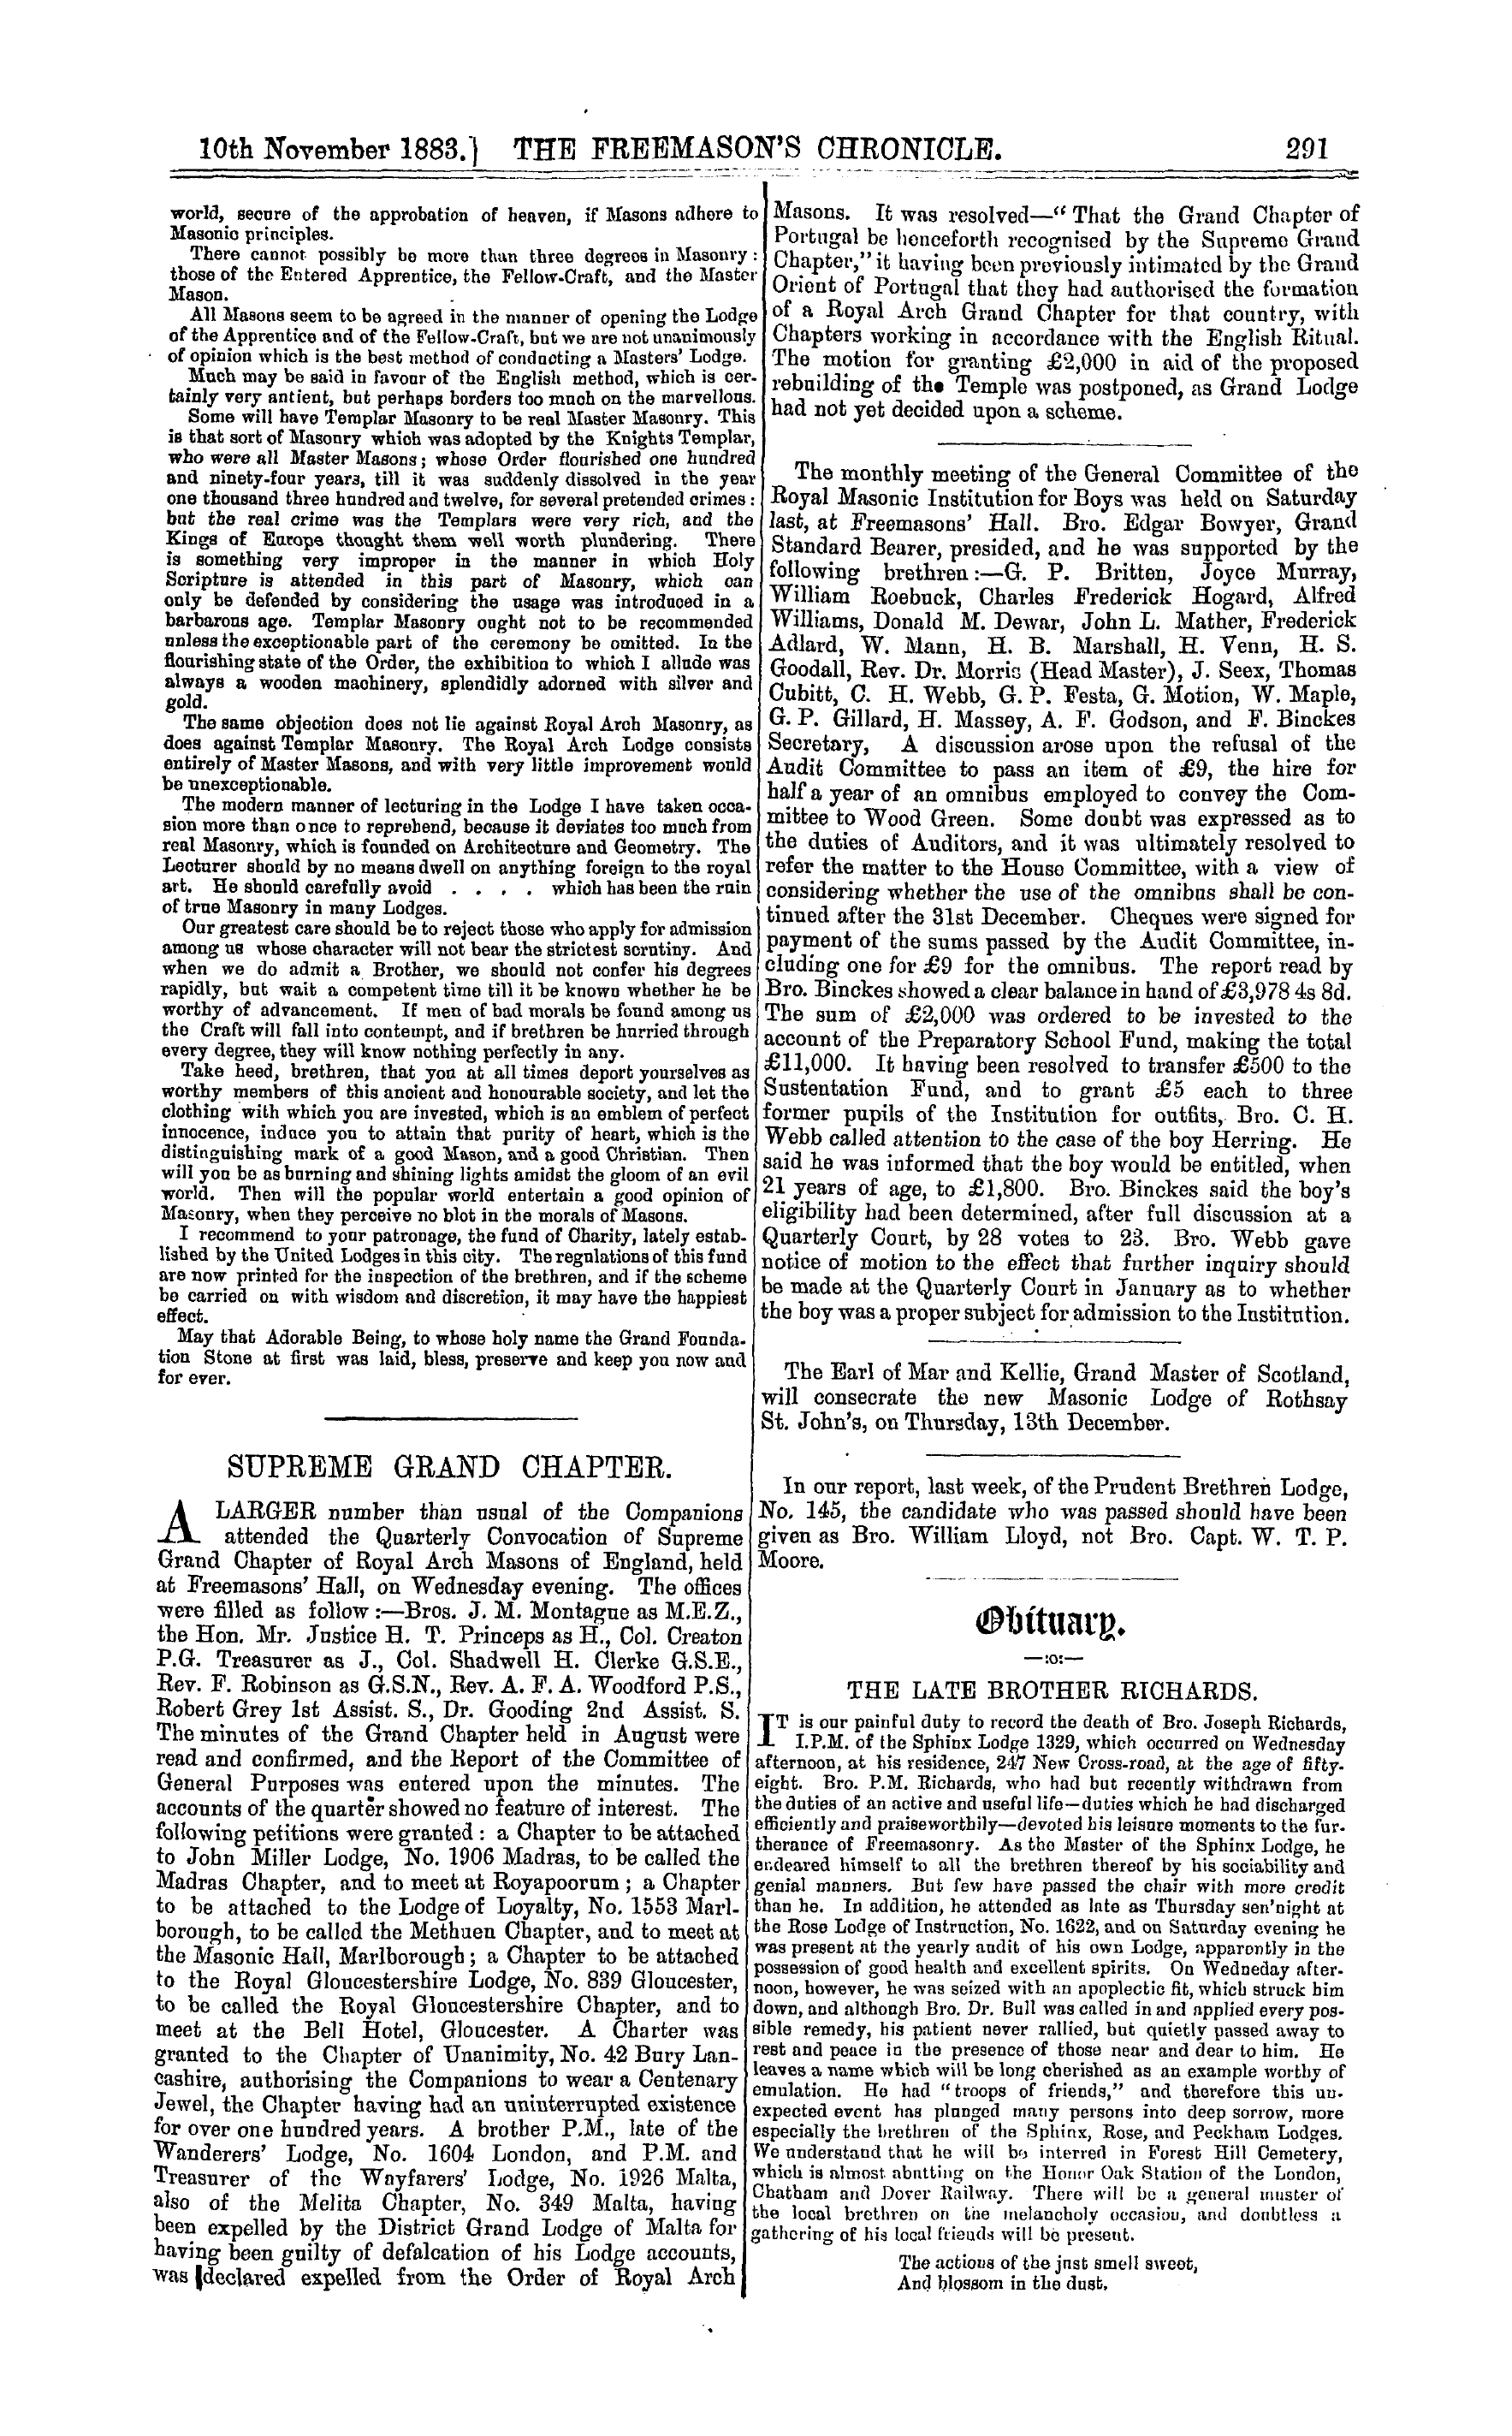 The Freemason's Chronicle: 1883-11-10 - An Old Masonic Oration.